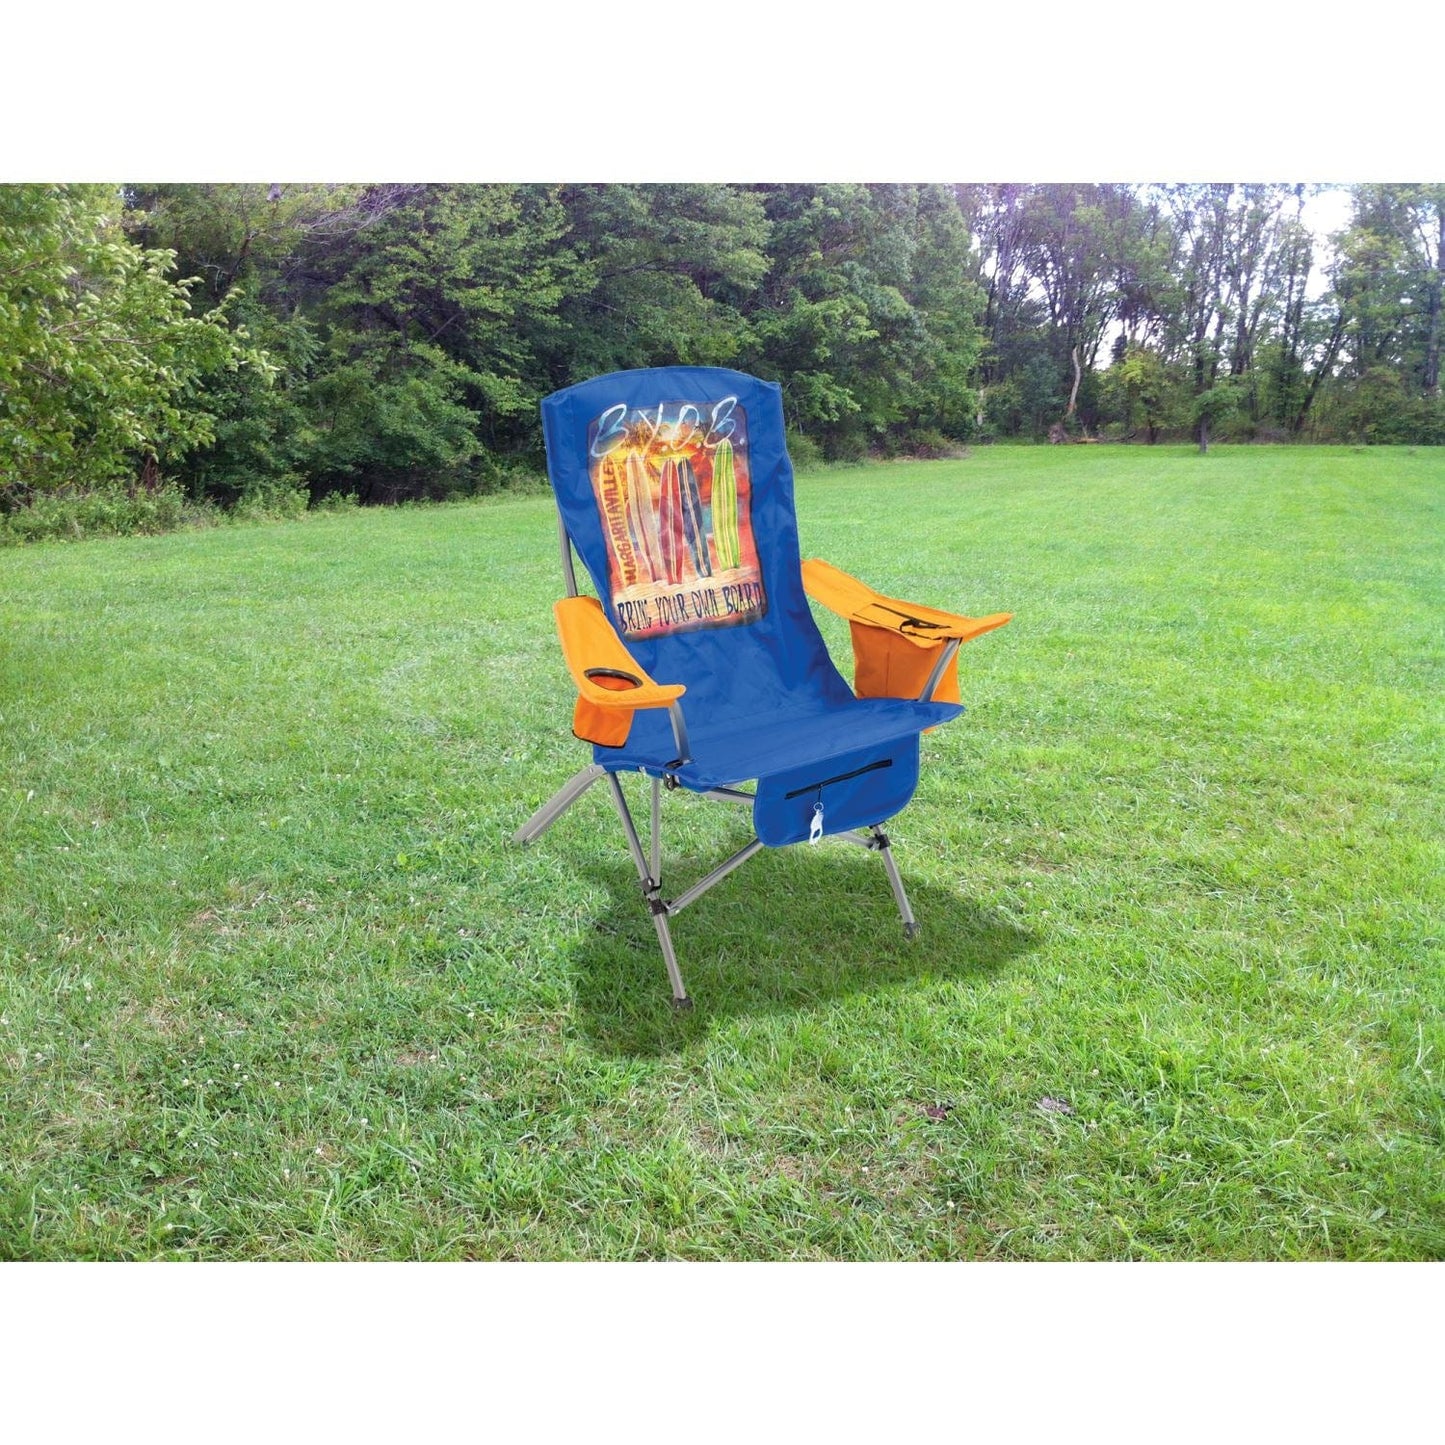 Margaritaville Chair Margaritaville | Suspension Chair - Bring Your Own Board - Teal/Orange 630253-1